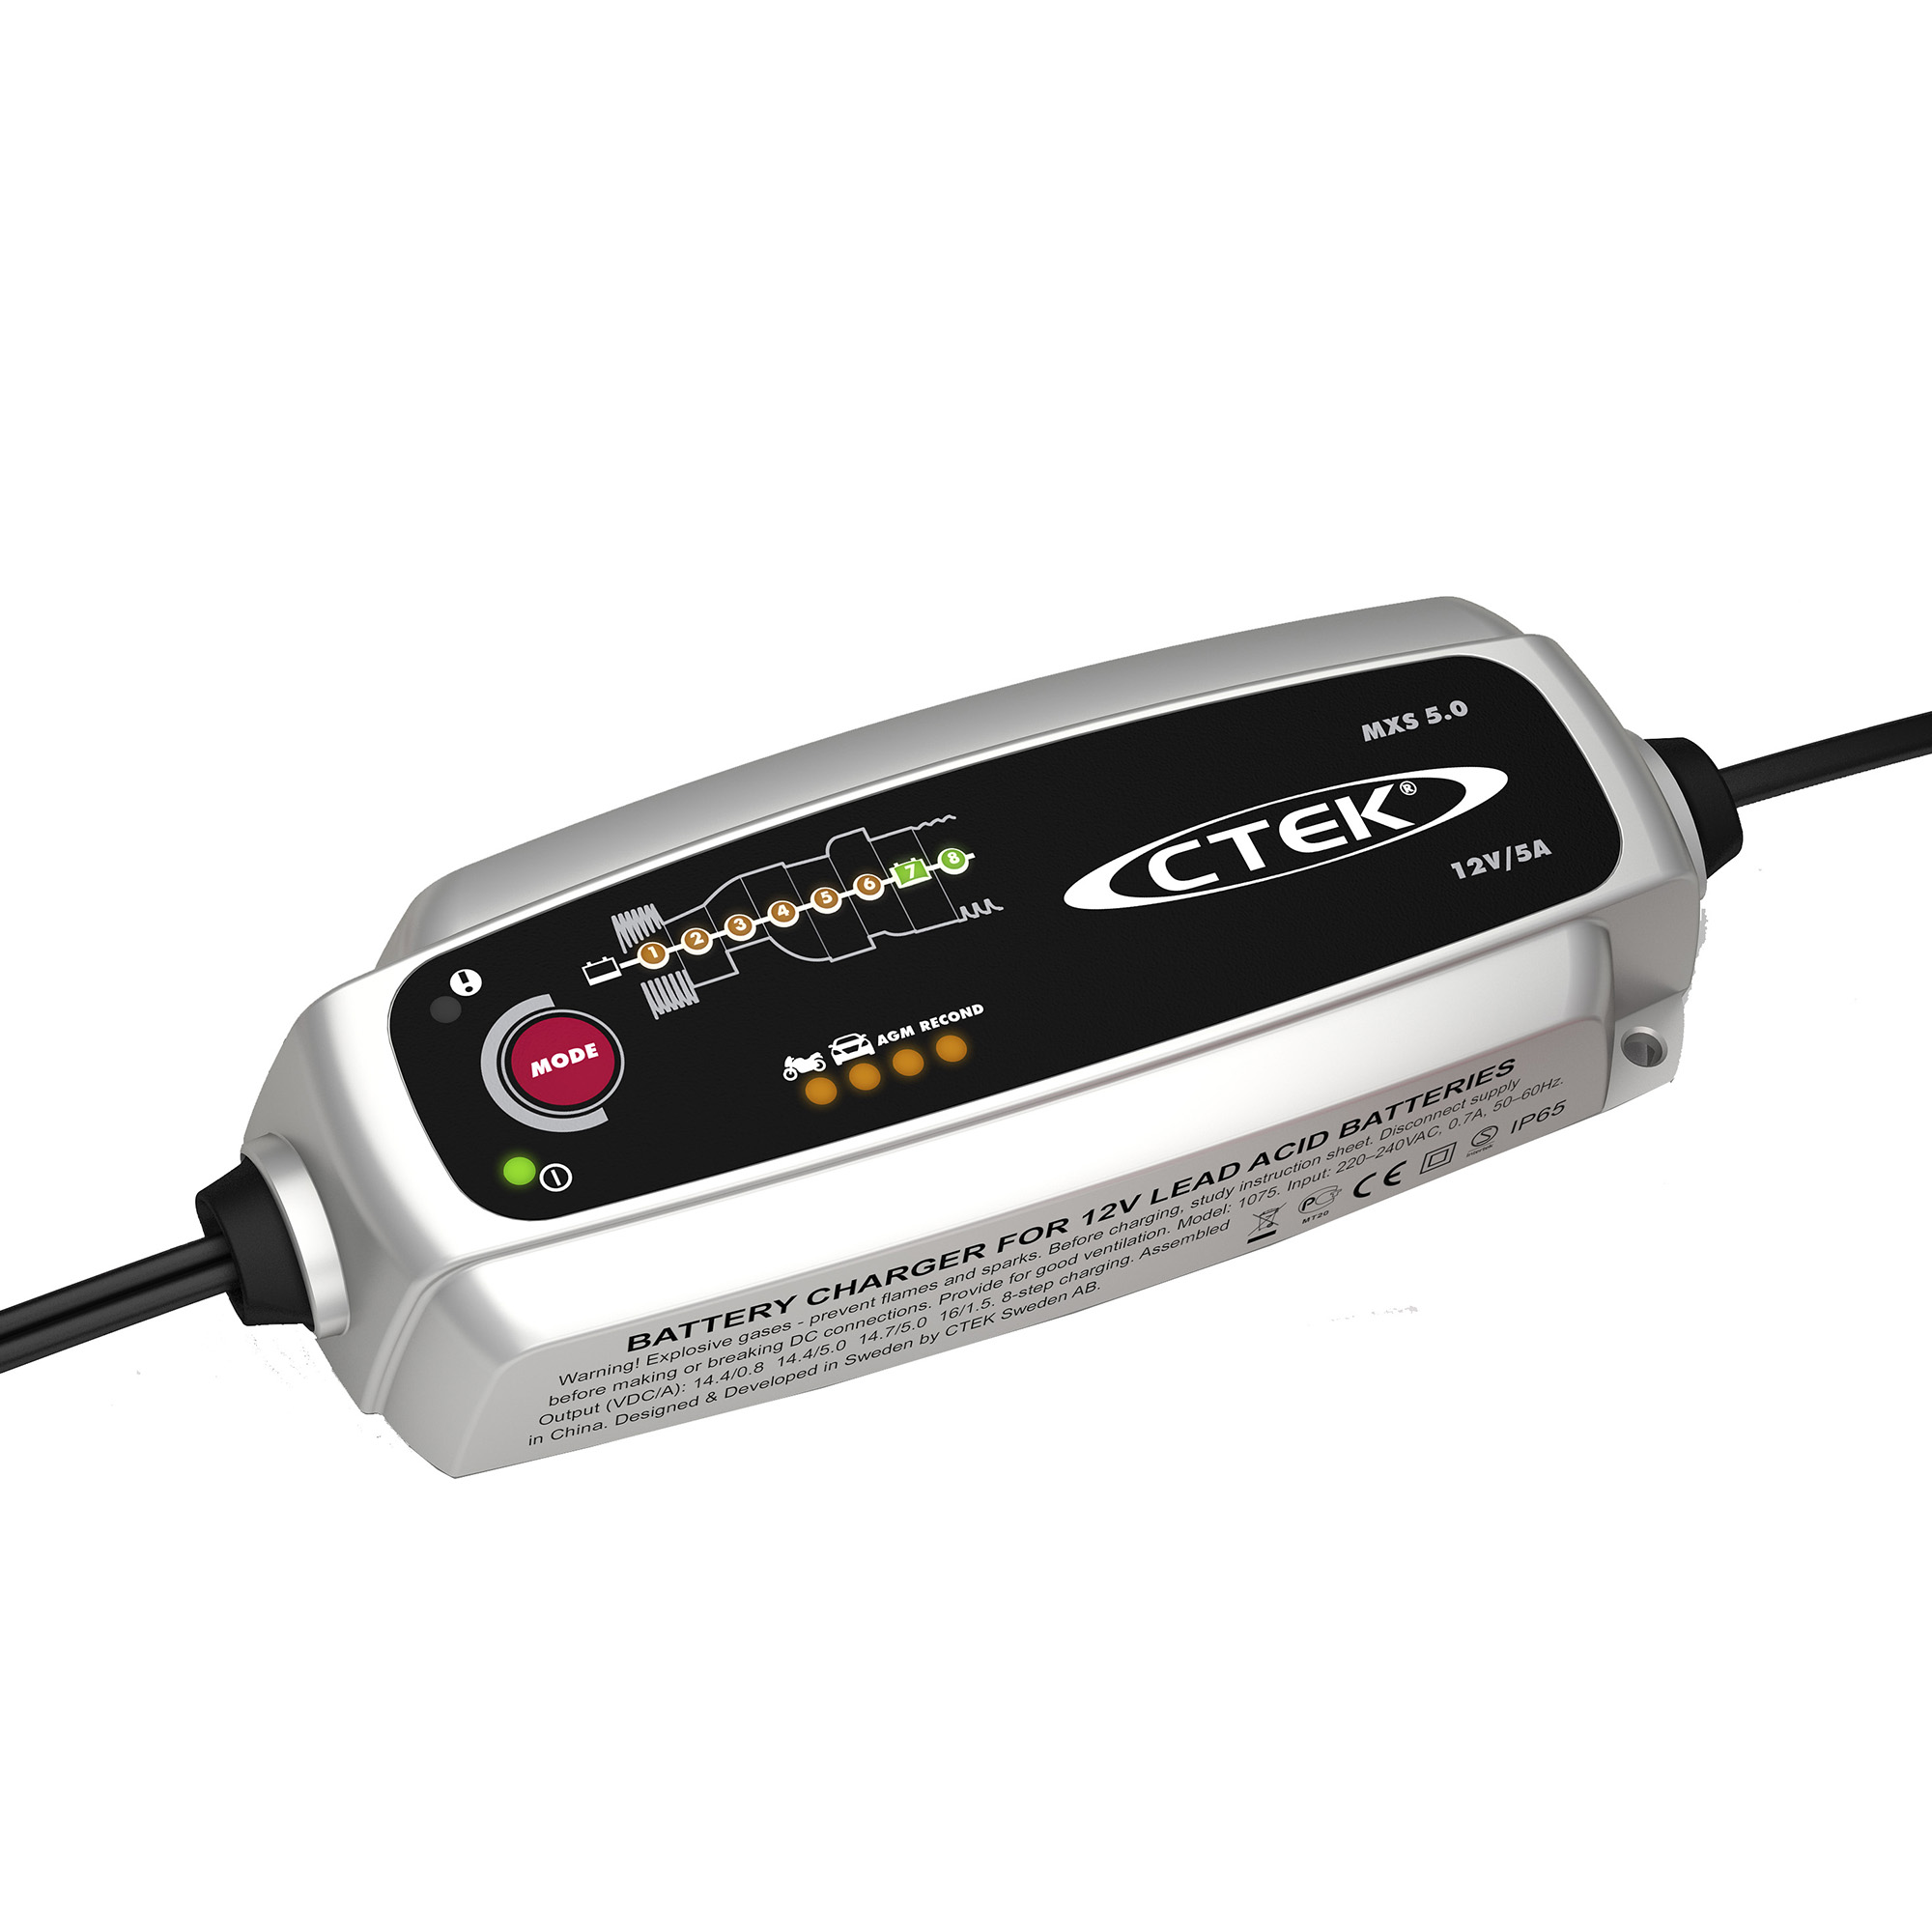 Smart Trickle Battery Charger 5 amp - CTEK MXS 5.0 at